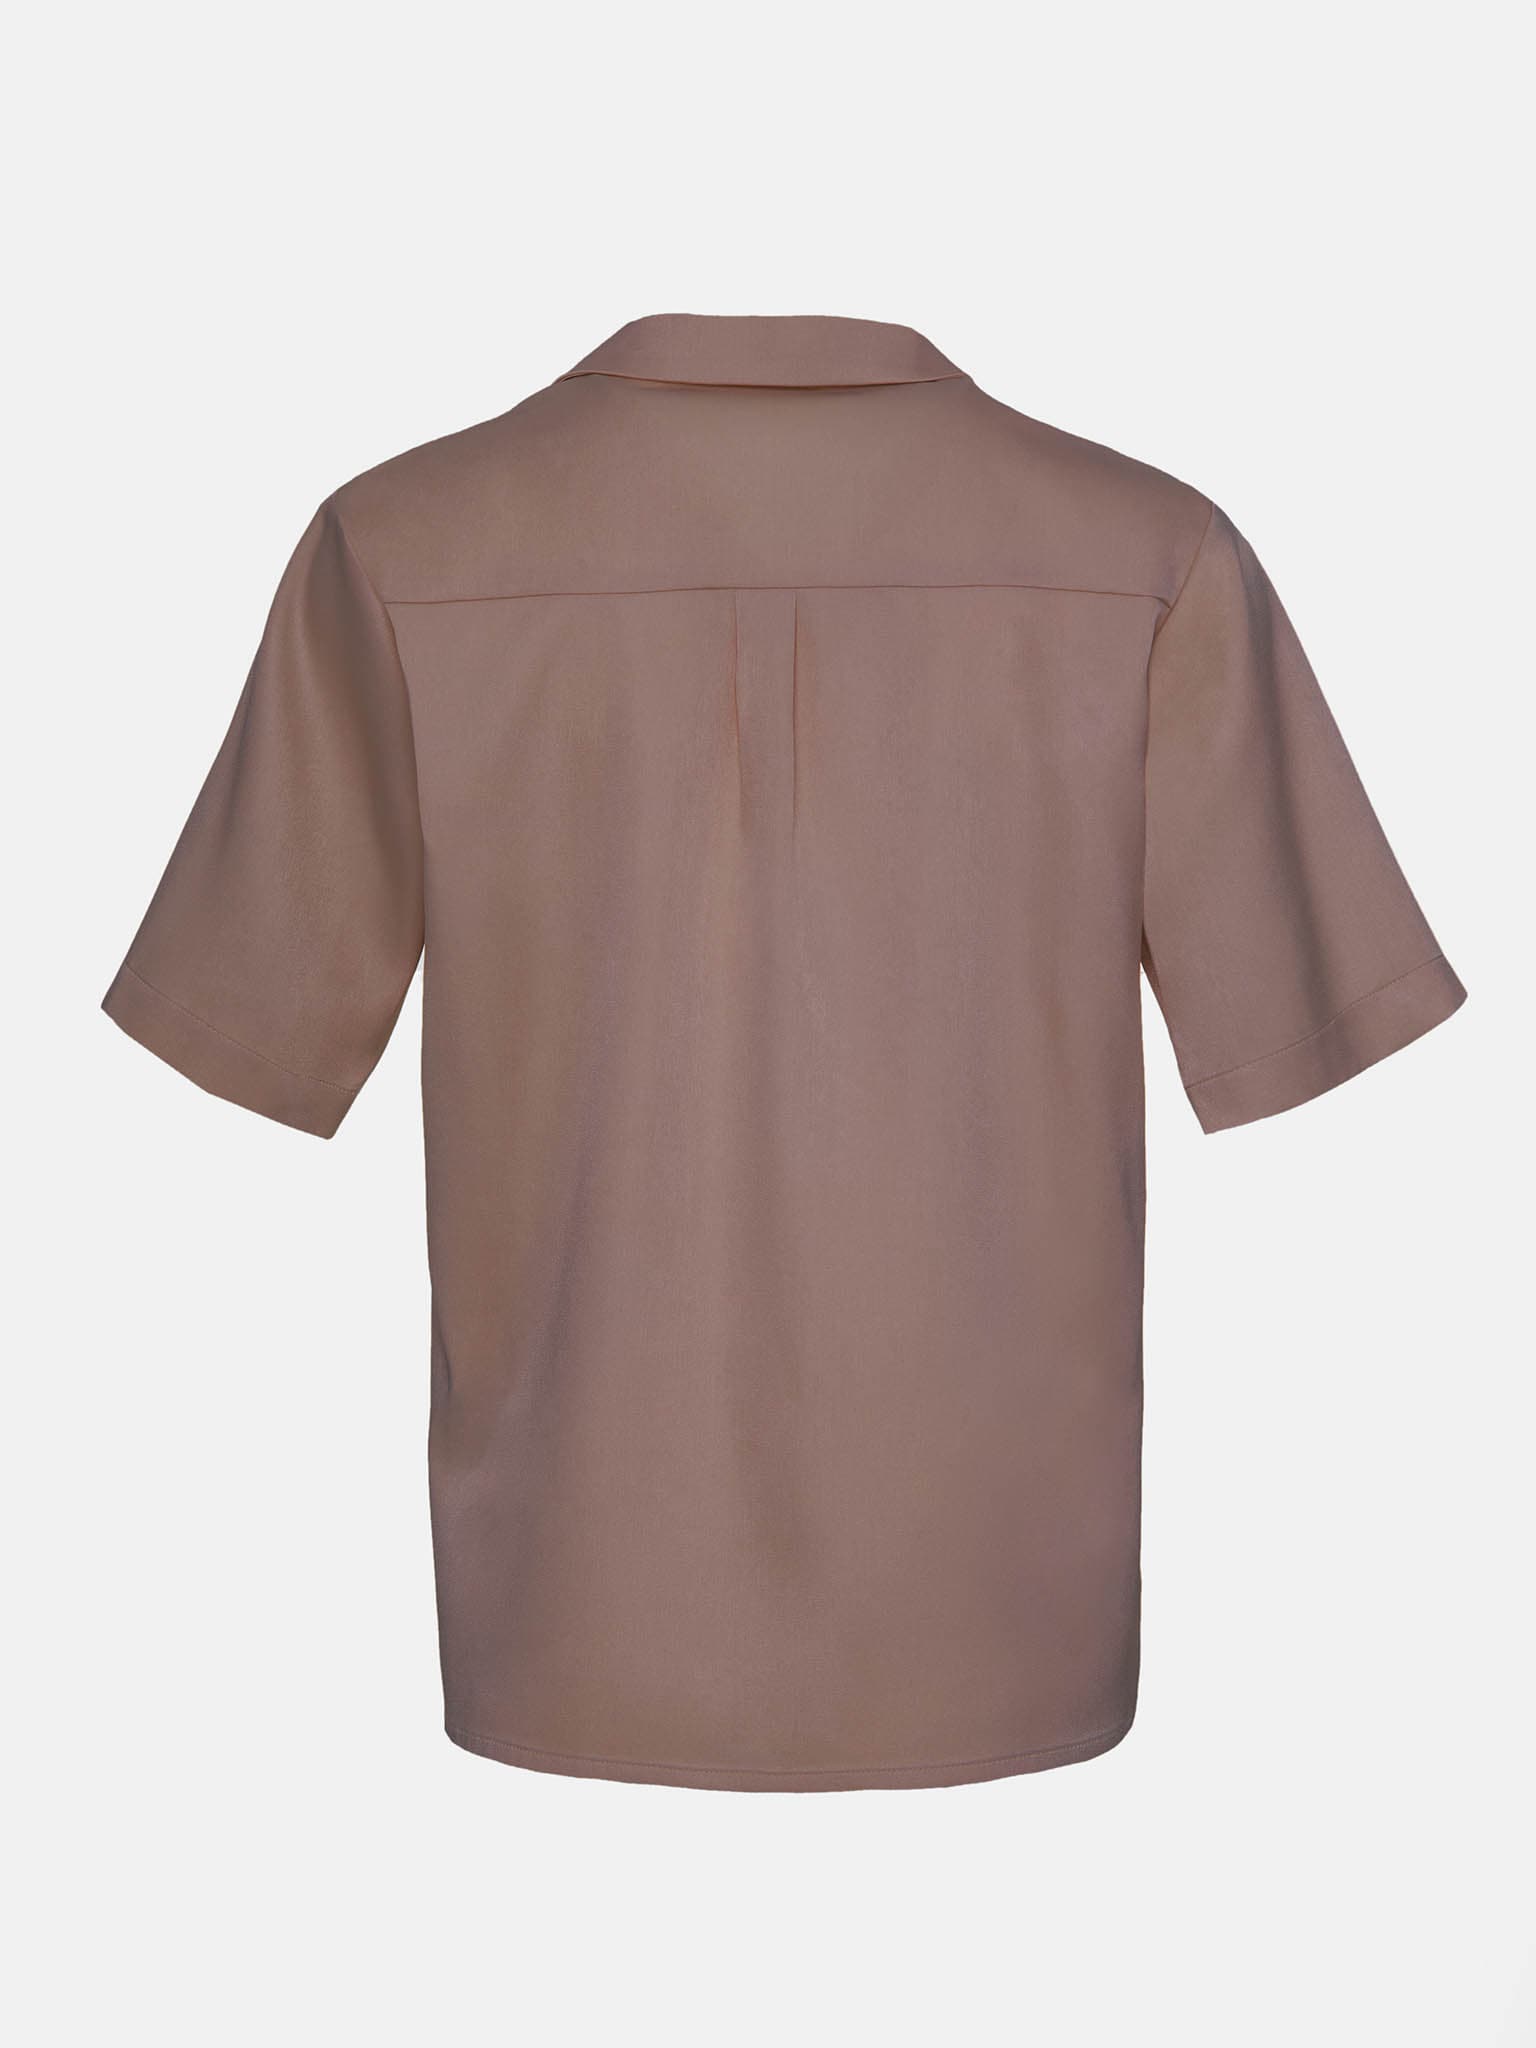 Flowing short-sleeve blouse